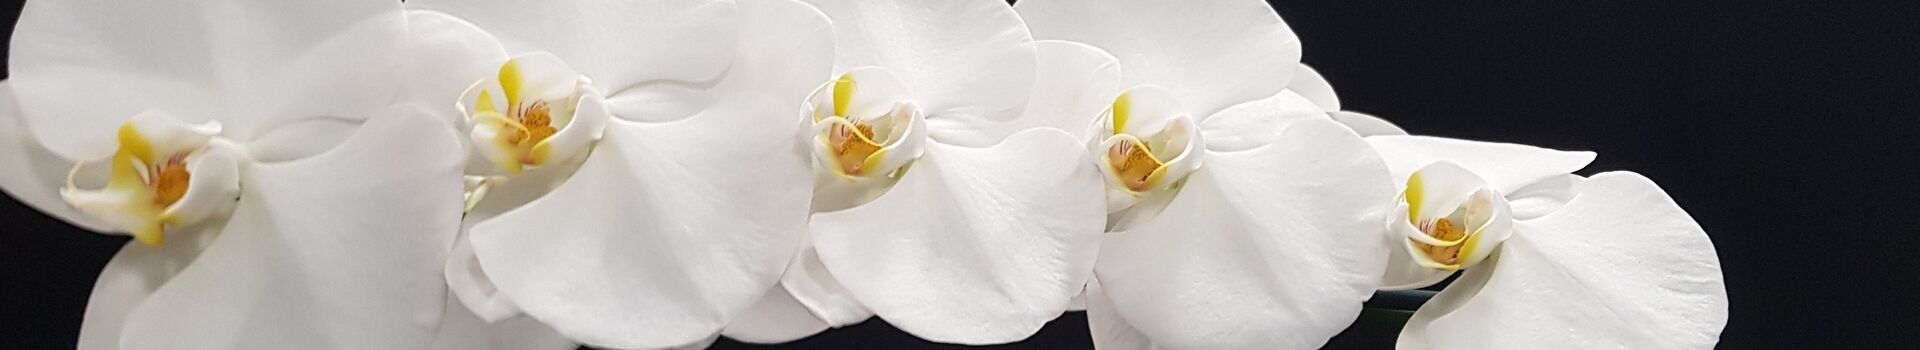 Aris Vision Systeem - Phalaenopsis bloemen